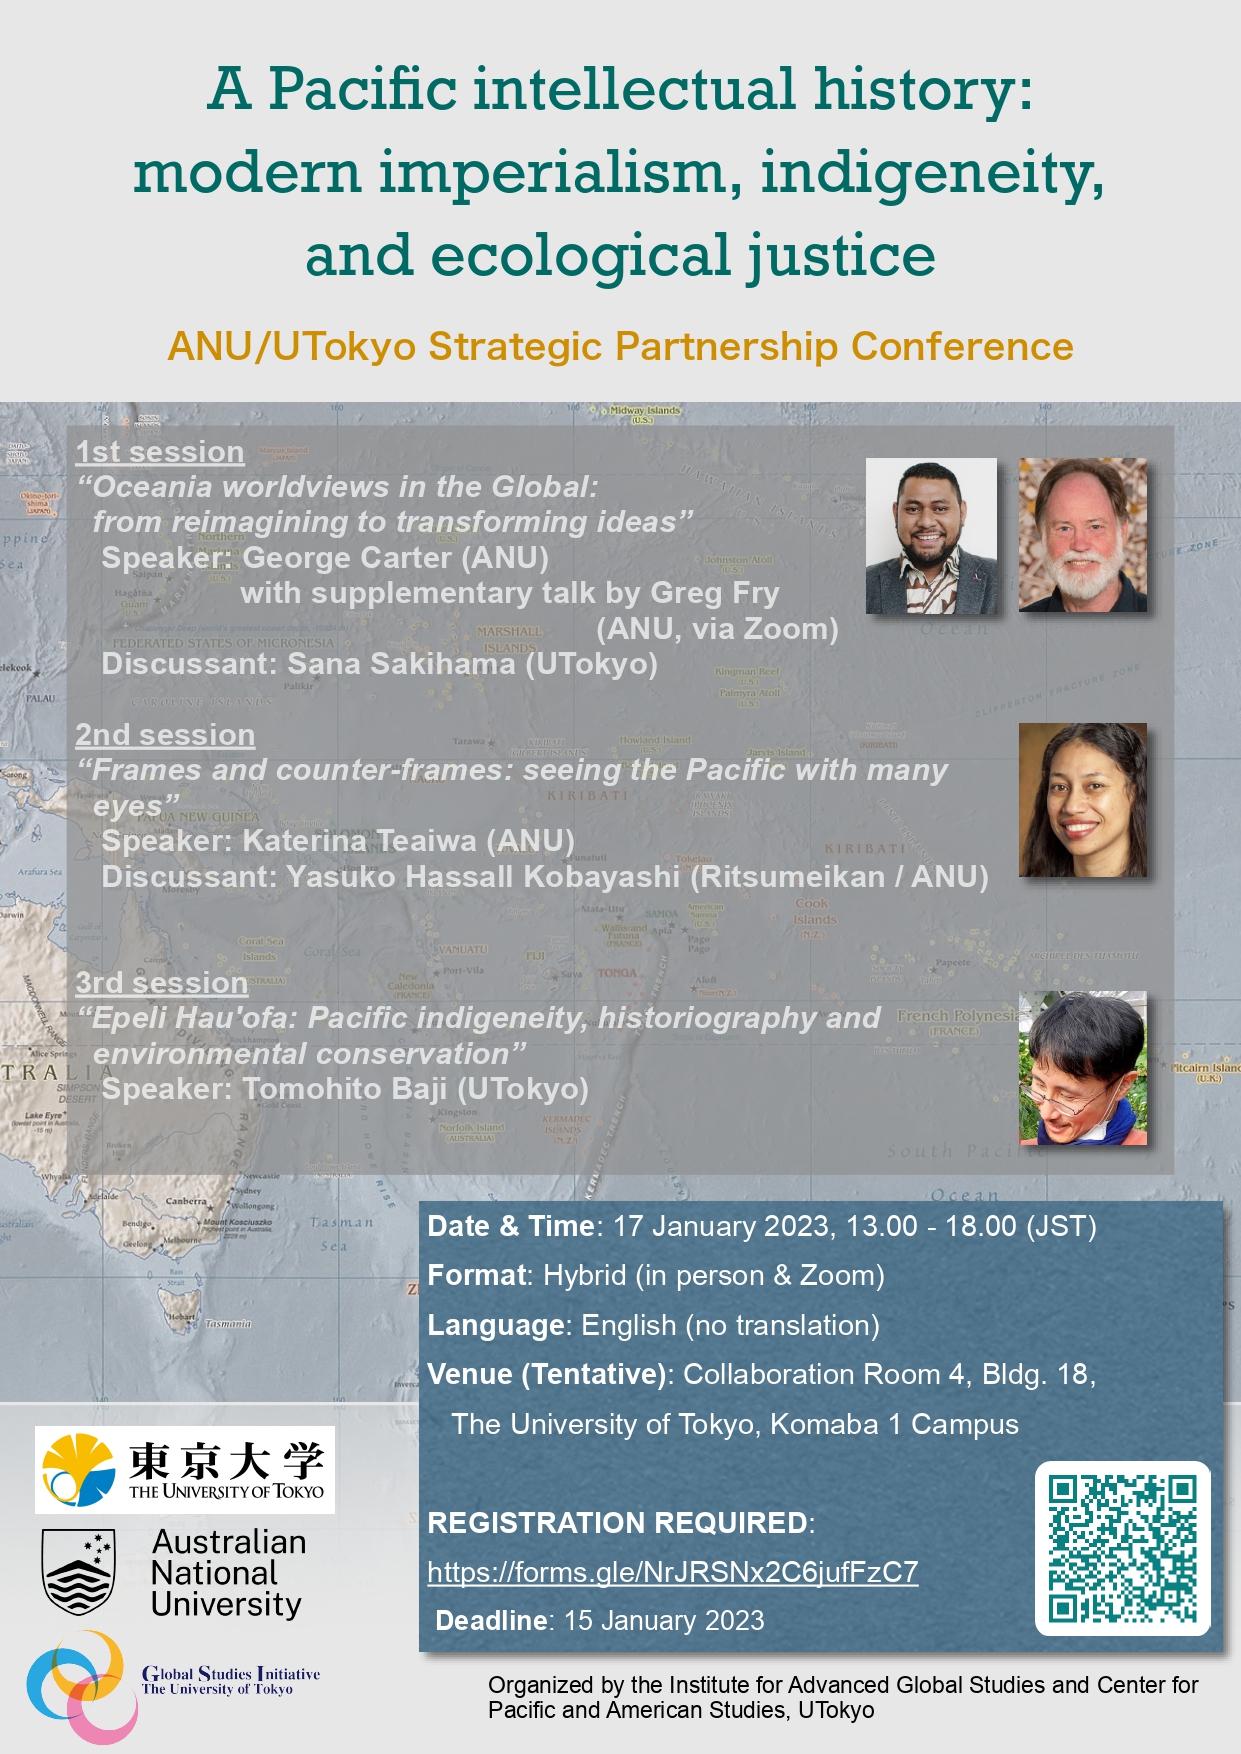 ANU/UTokyo Strategic Partnership Conference “A Pacific Intellectual History”